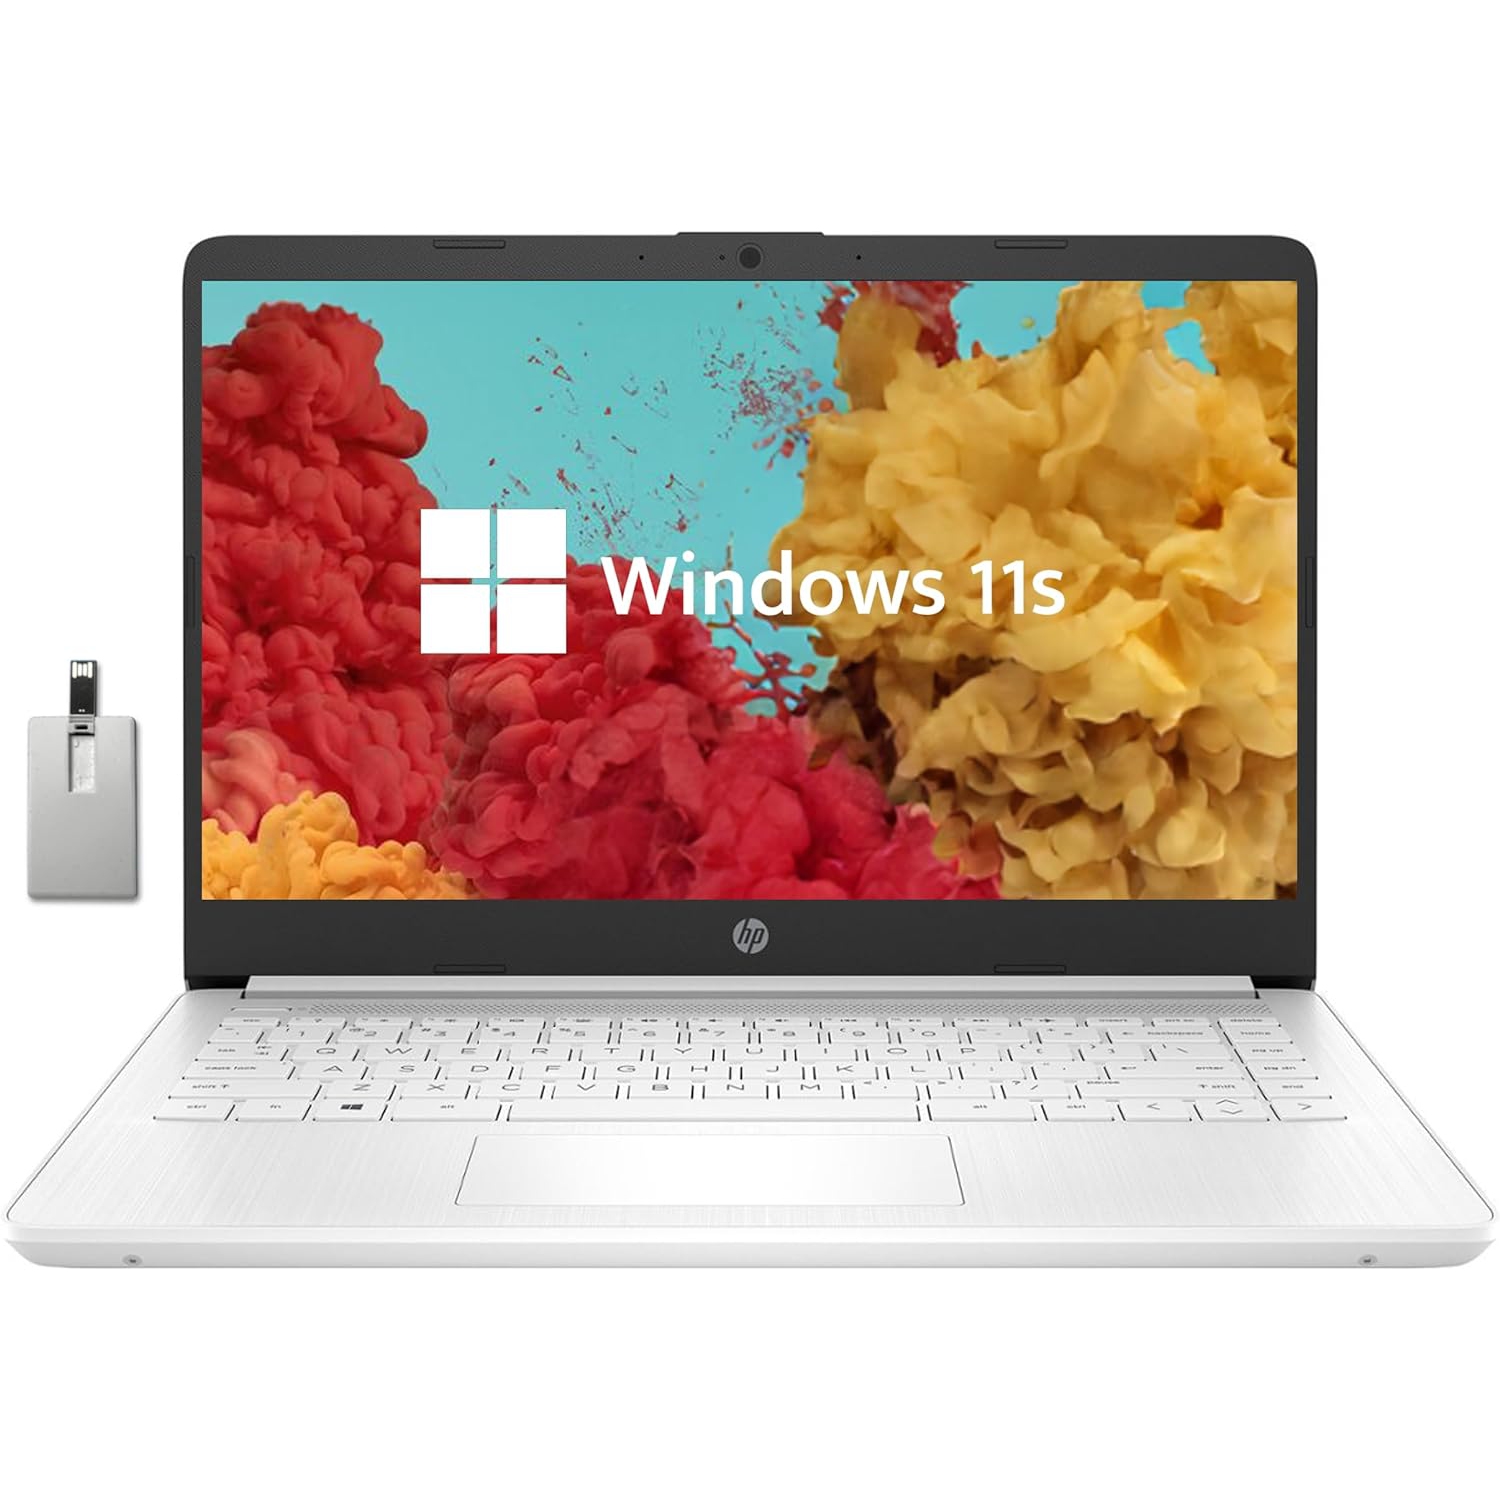 HP Premium Stream 14" HD BrightView Laptop, Intel Celeron N4000, 64GB eMMC, 16GB RAM, Intel UHD Graphics, HD Webcam, 1 Year Office 365, HDMI, Win 11s, White, 32GB USB Card